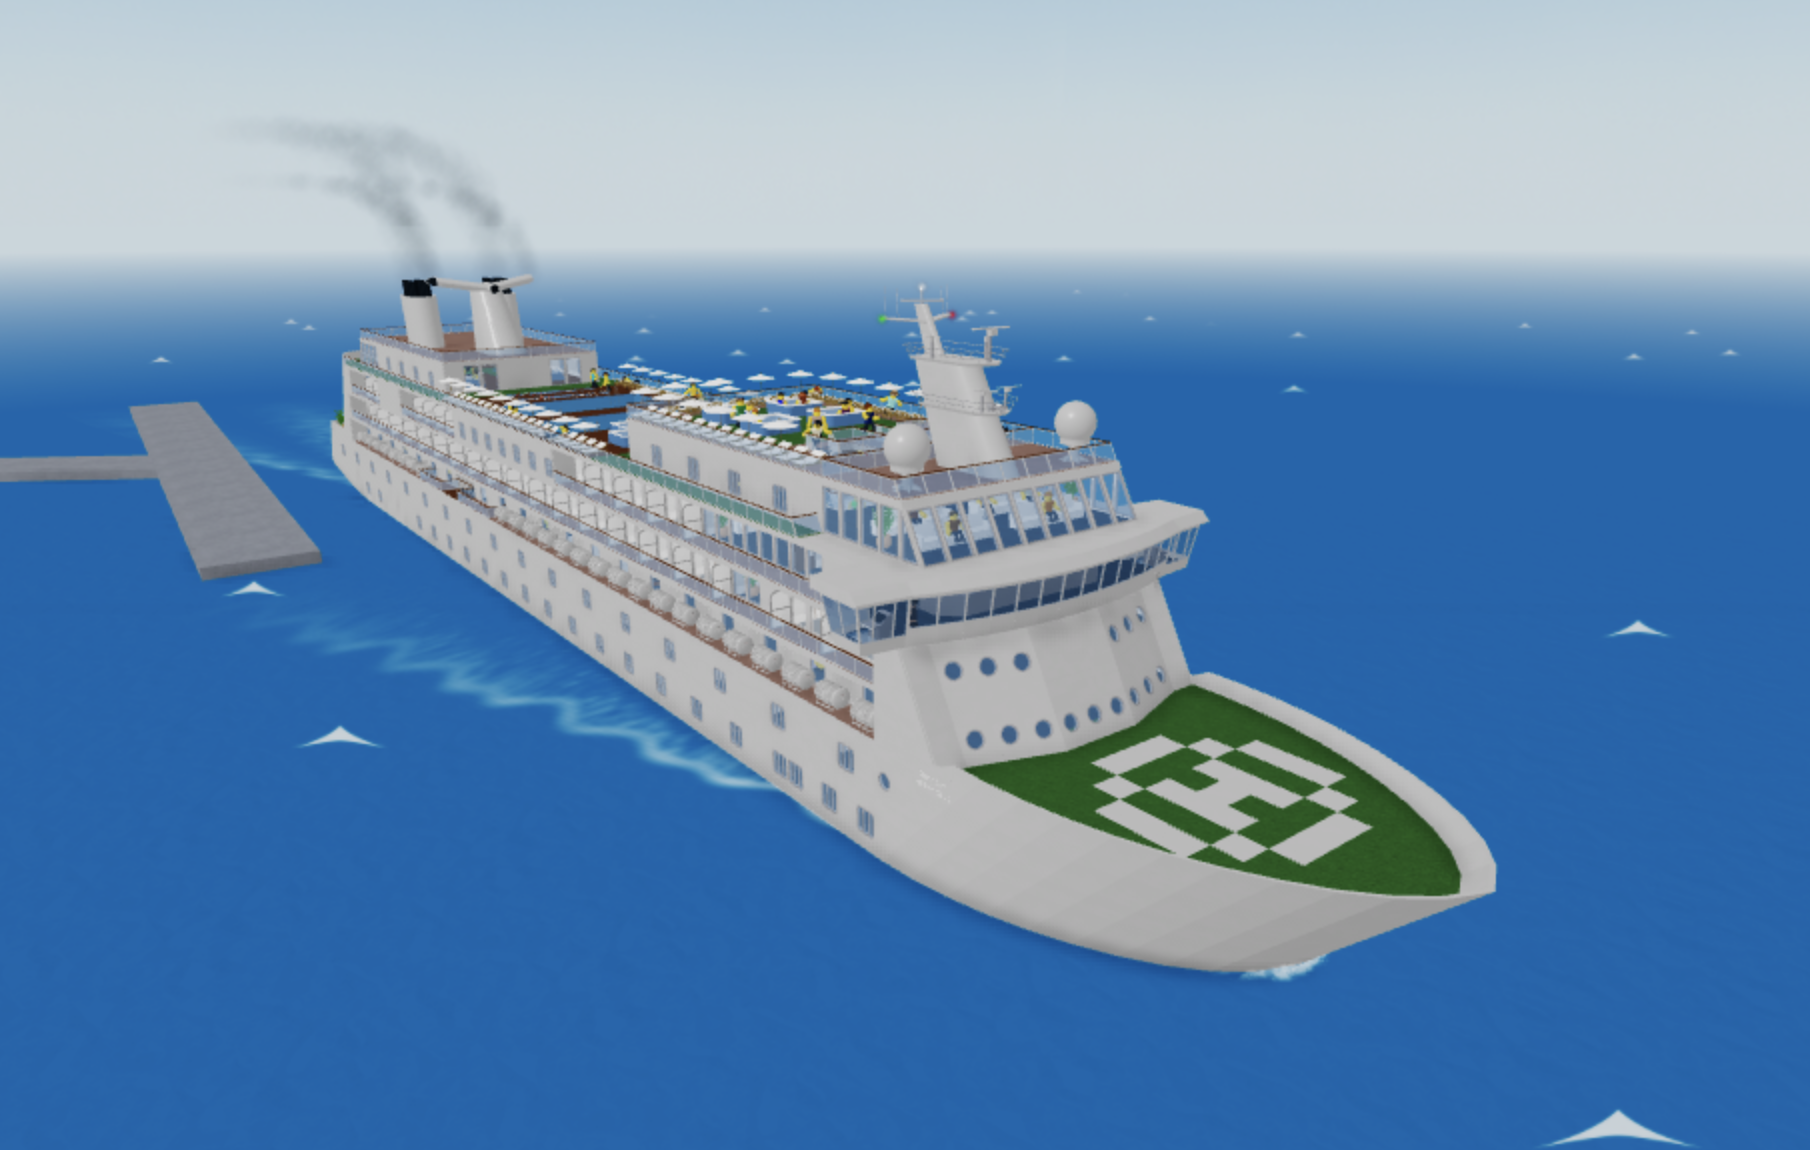 Cruise ship tycoon